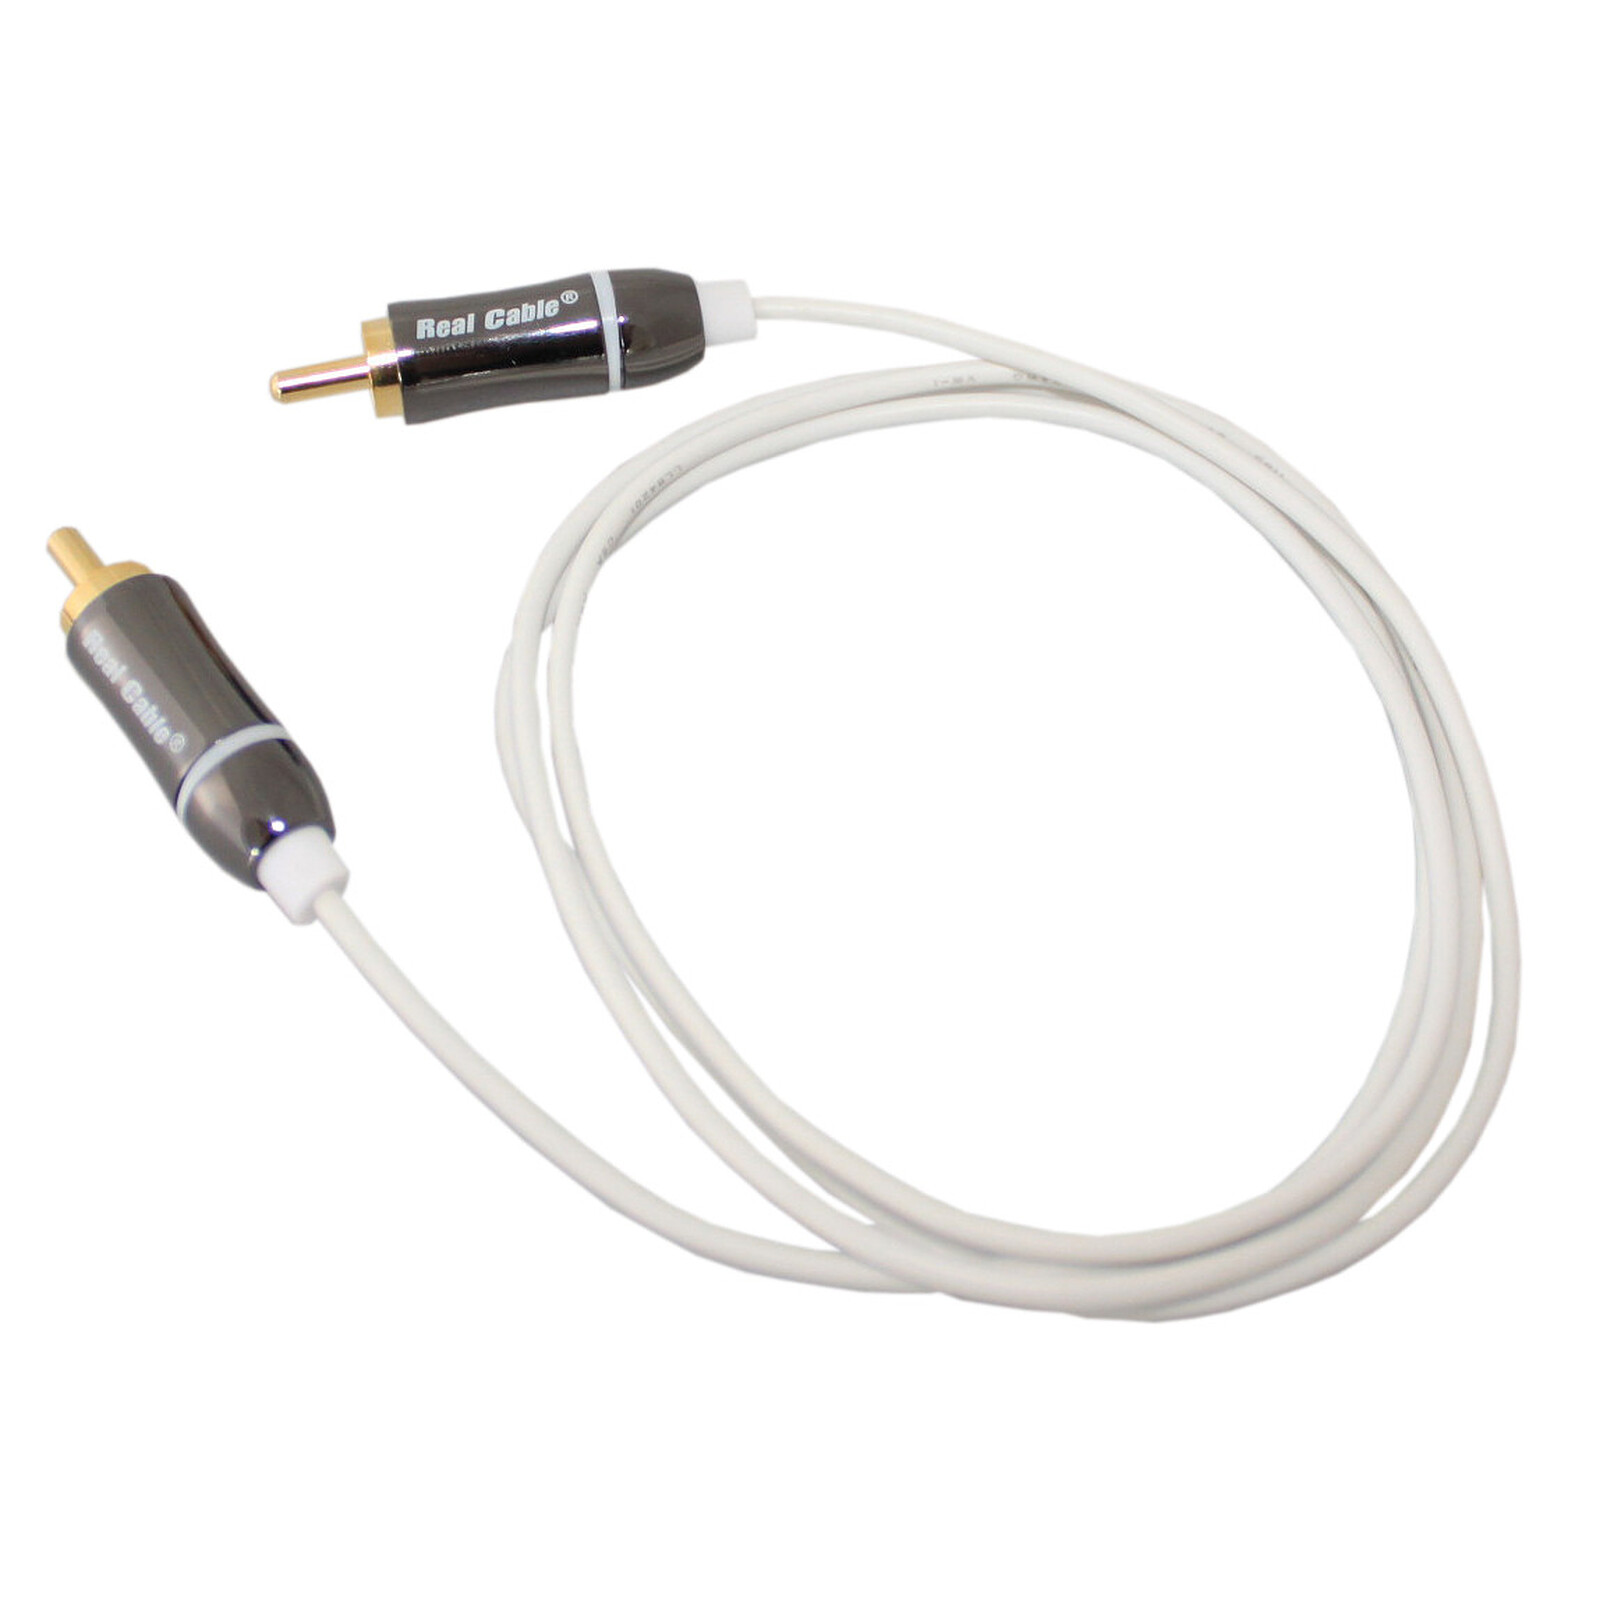 Real Cable Nano Sub 10m - Câble audio RCA - Garantie 3 ans LDLC